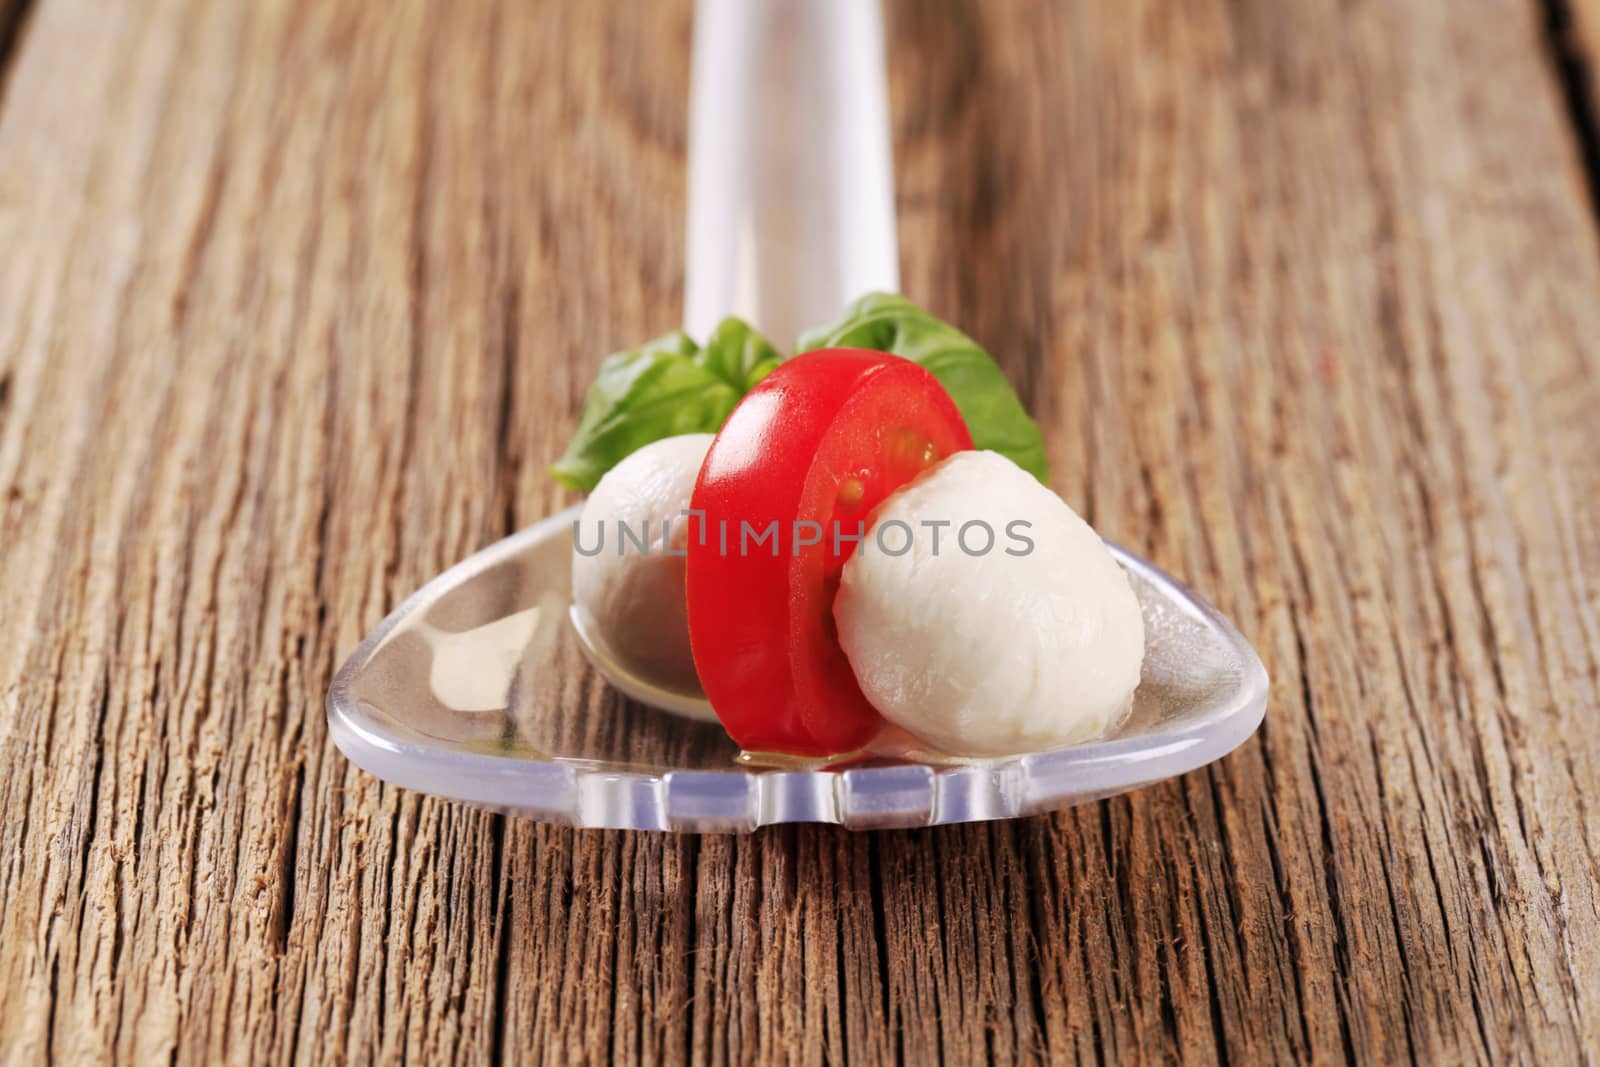 Mozzarella cheese balls and tomato on a salad spoon